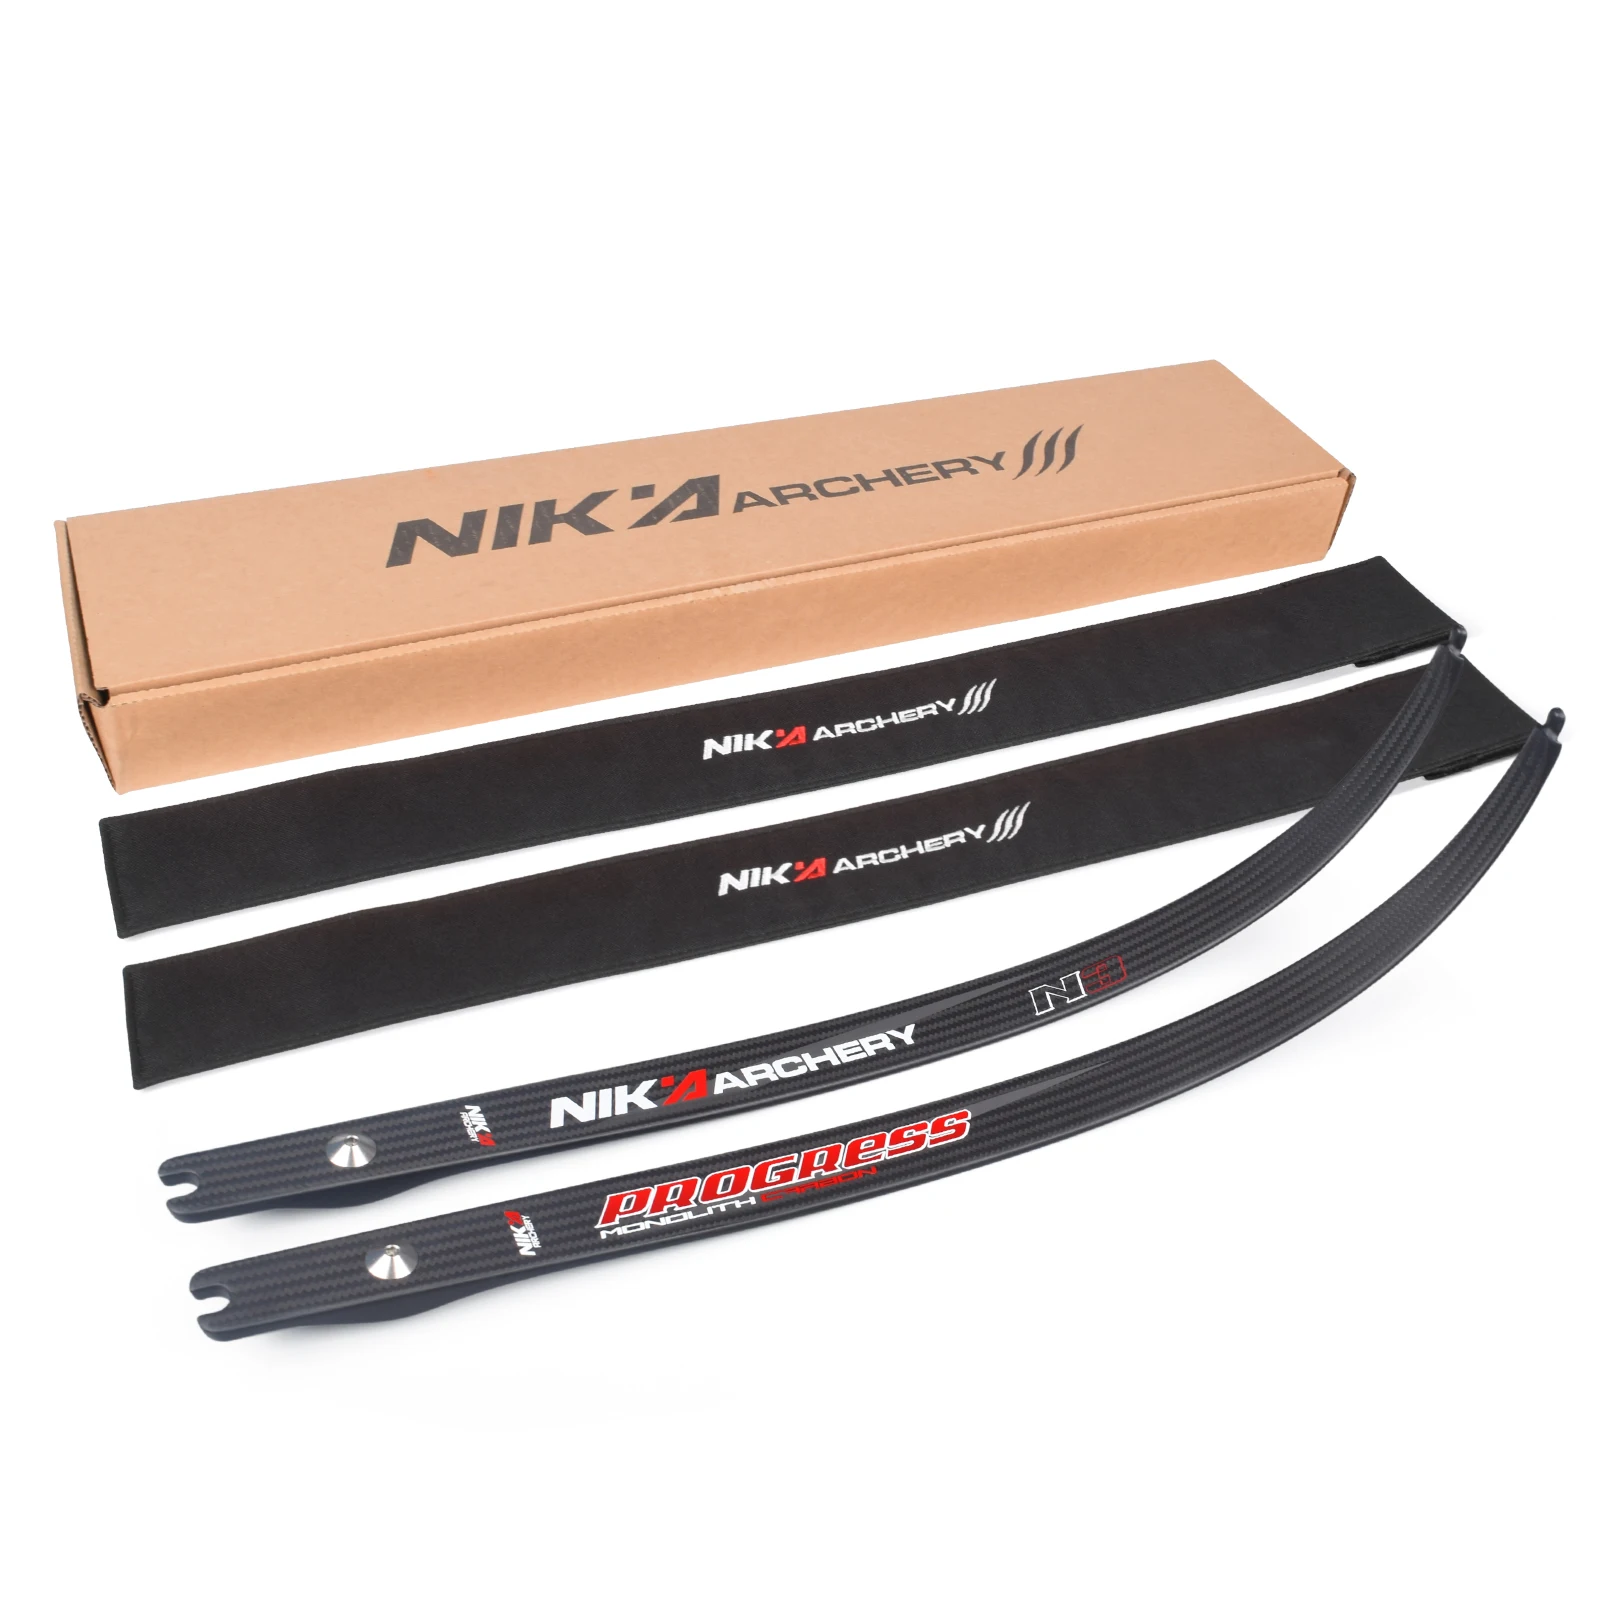 

1 pair NIKA ARCHERY N3 68" Recurve Bow Limbs Progress Series Carbon Fiber Limb 20-46 lbs 55% Carbon fiber content